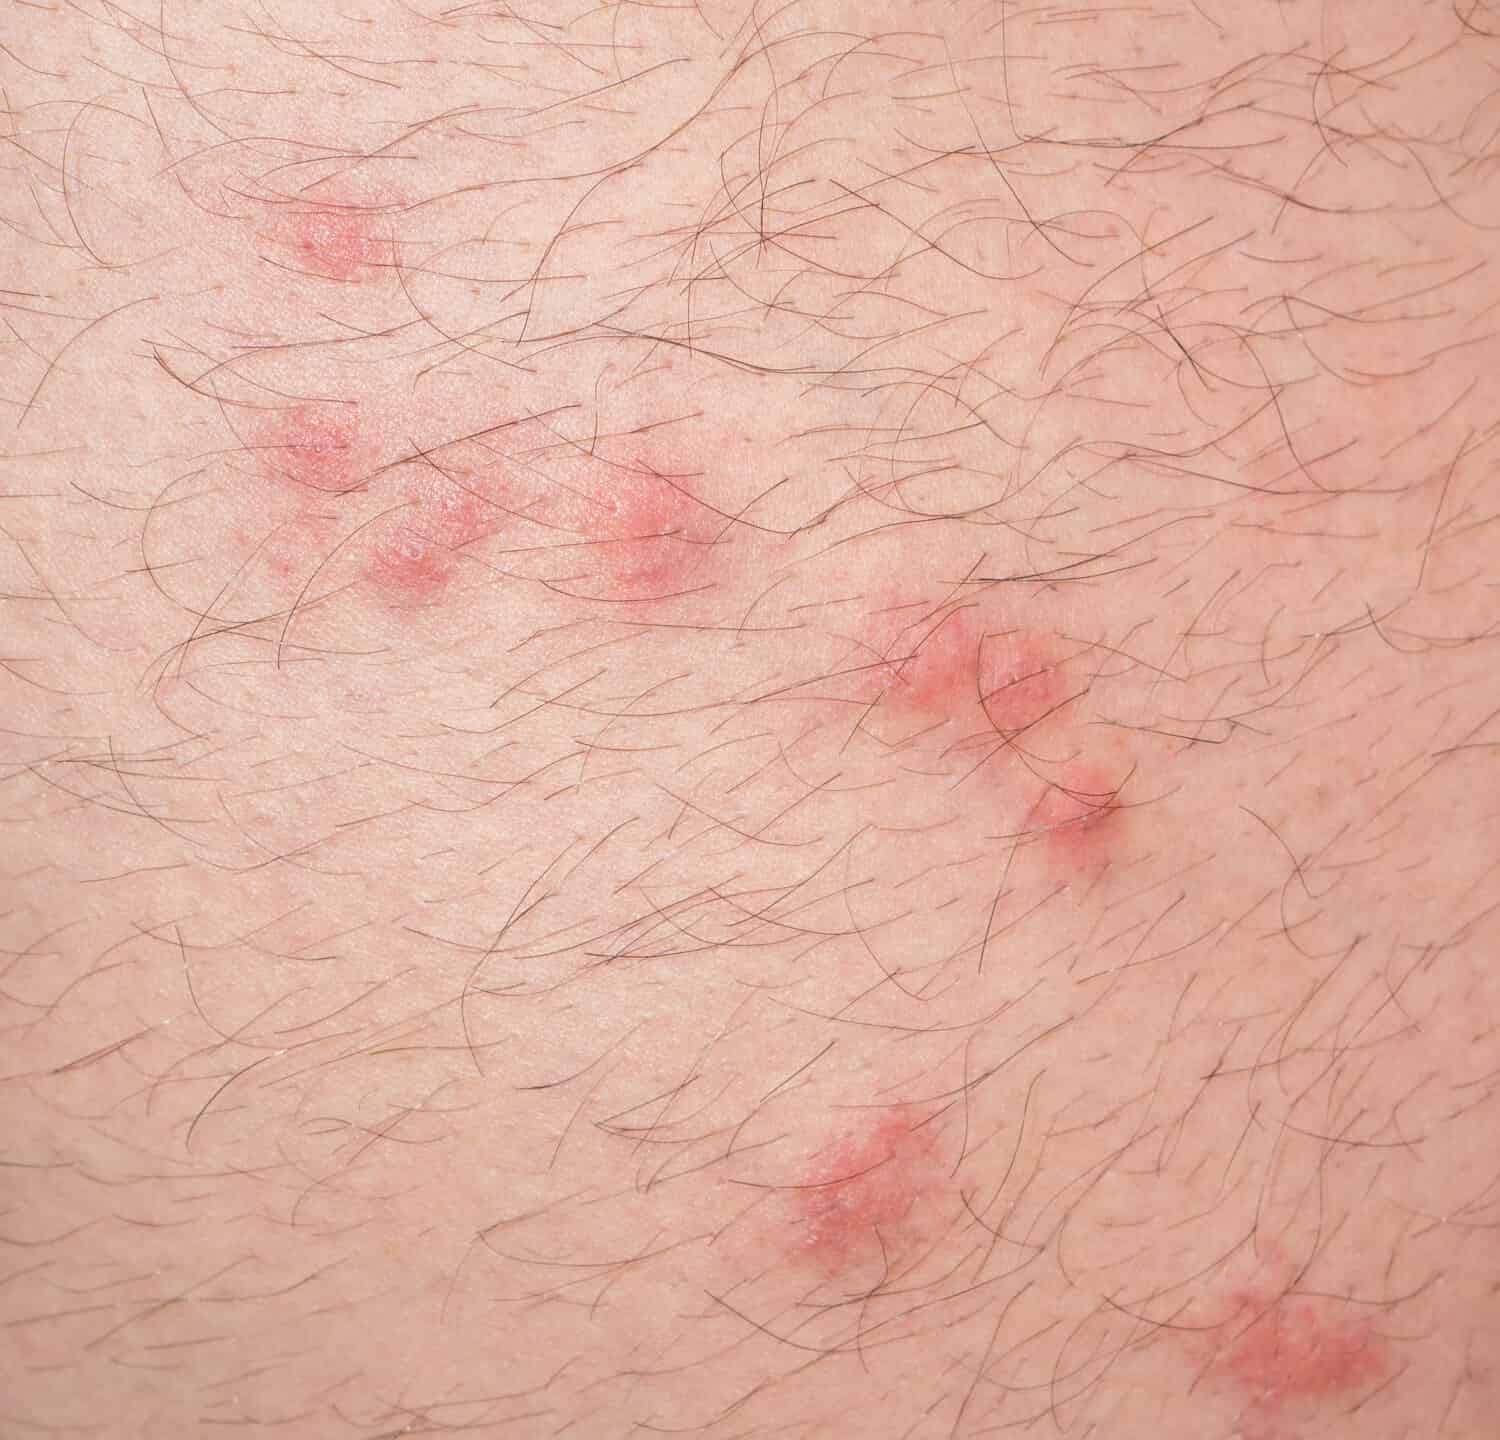 close up view of flea bites over caucasian man leg skin